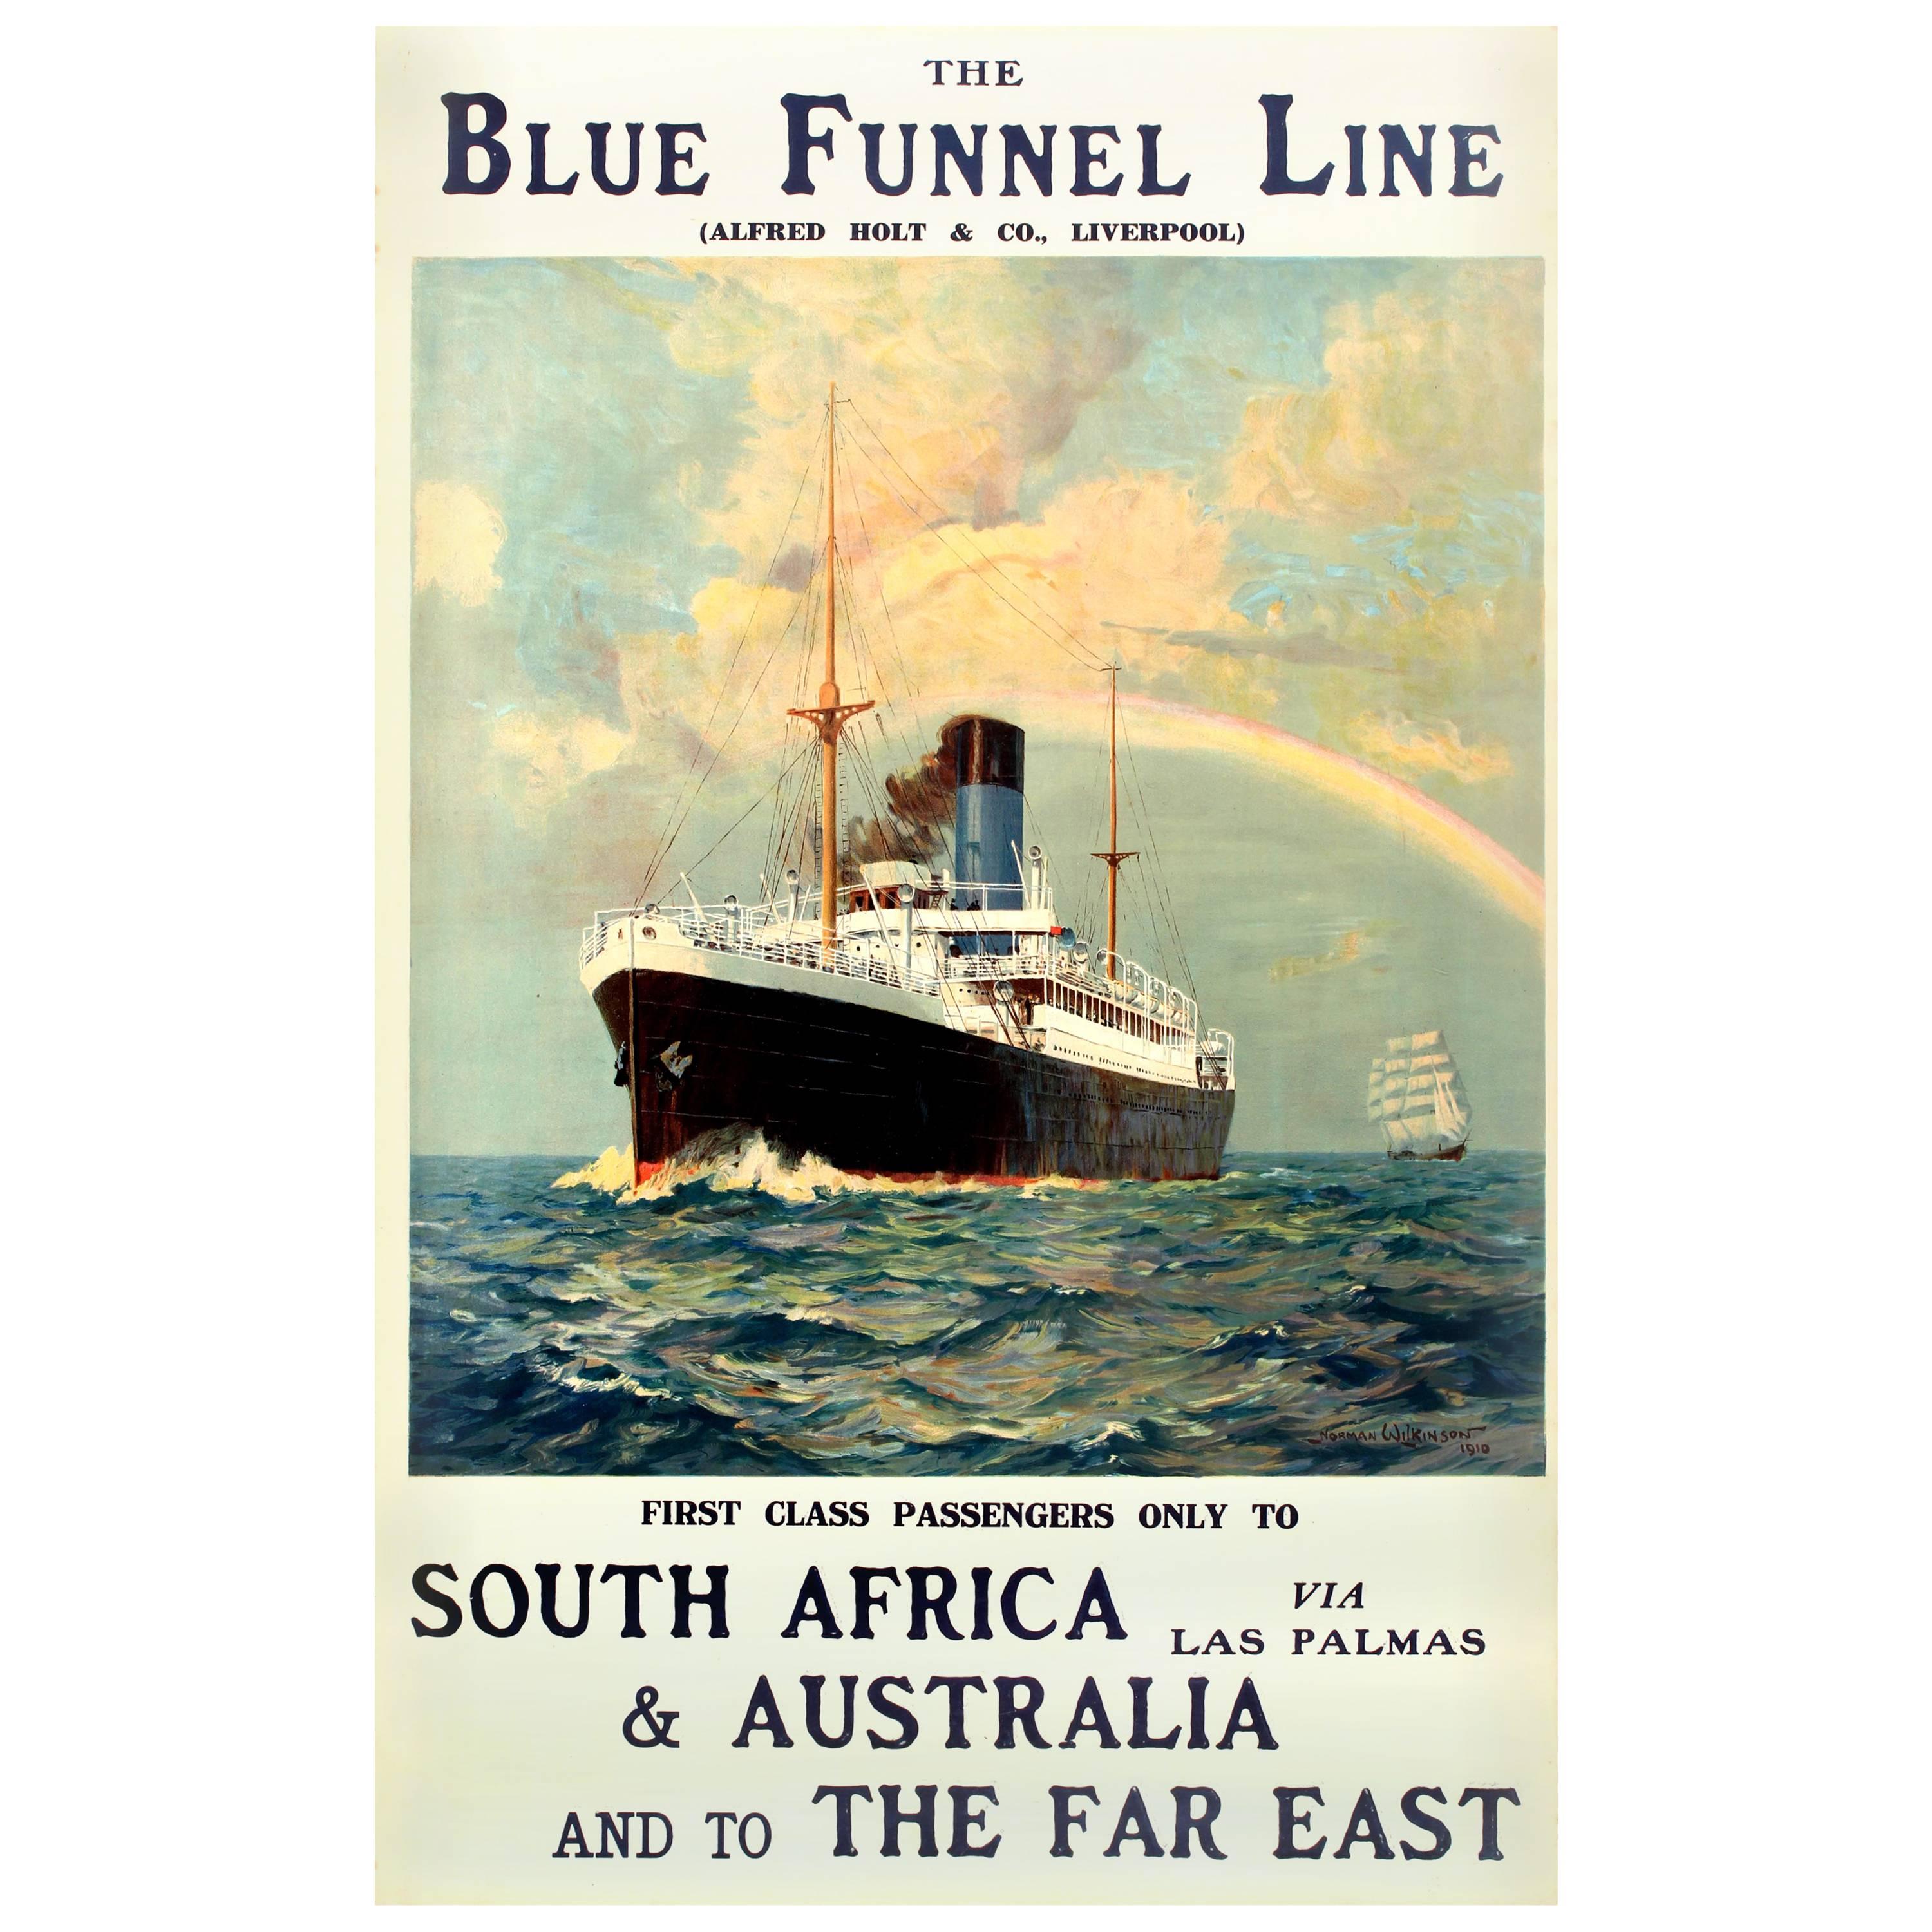 Original Blue Funnel Line Cruise Ship Poster for South Africa Australia Far East